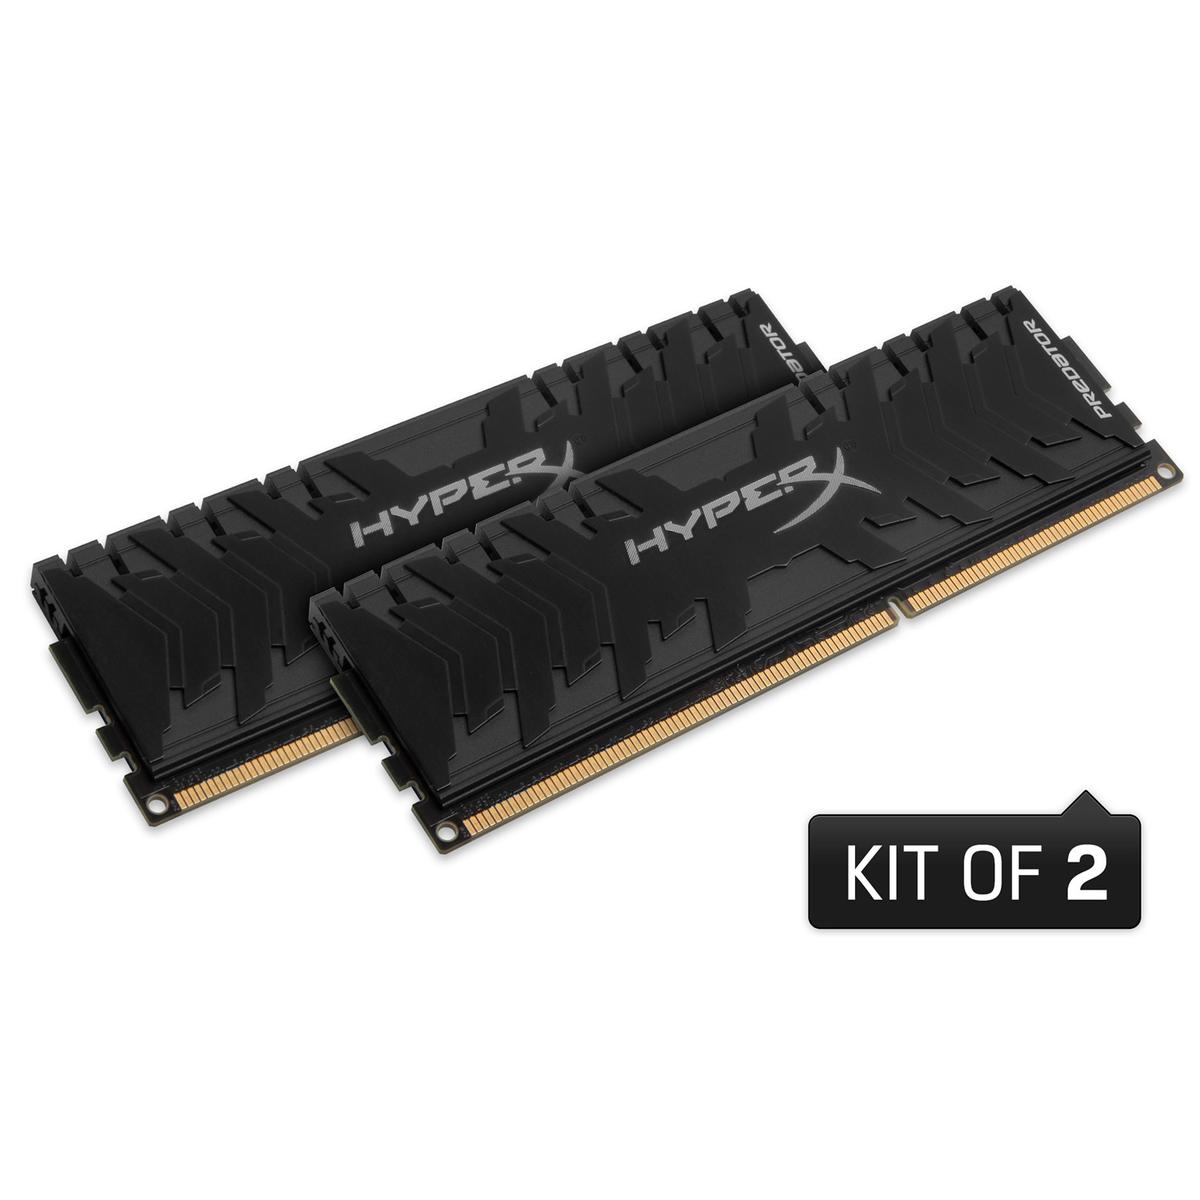 Kingston HyperX Predator 16 GB (2x8 GB) DDR4-3000